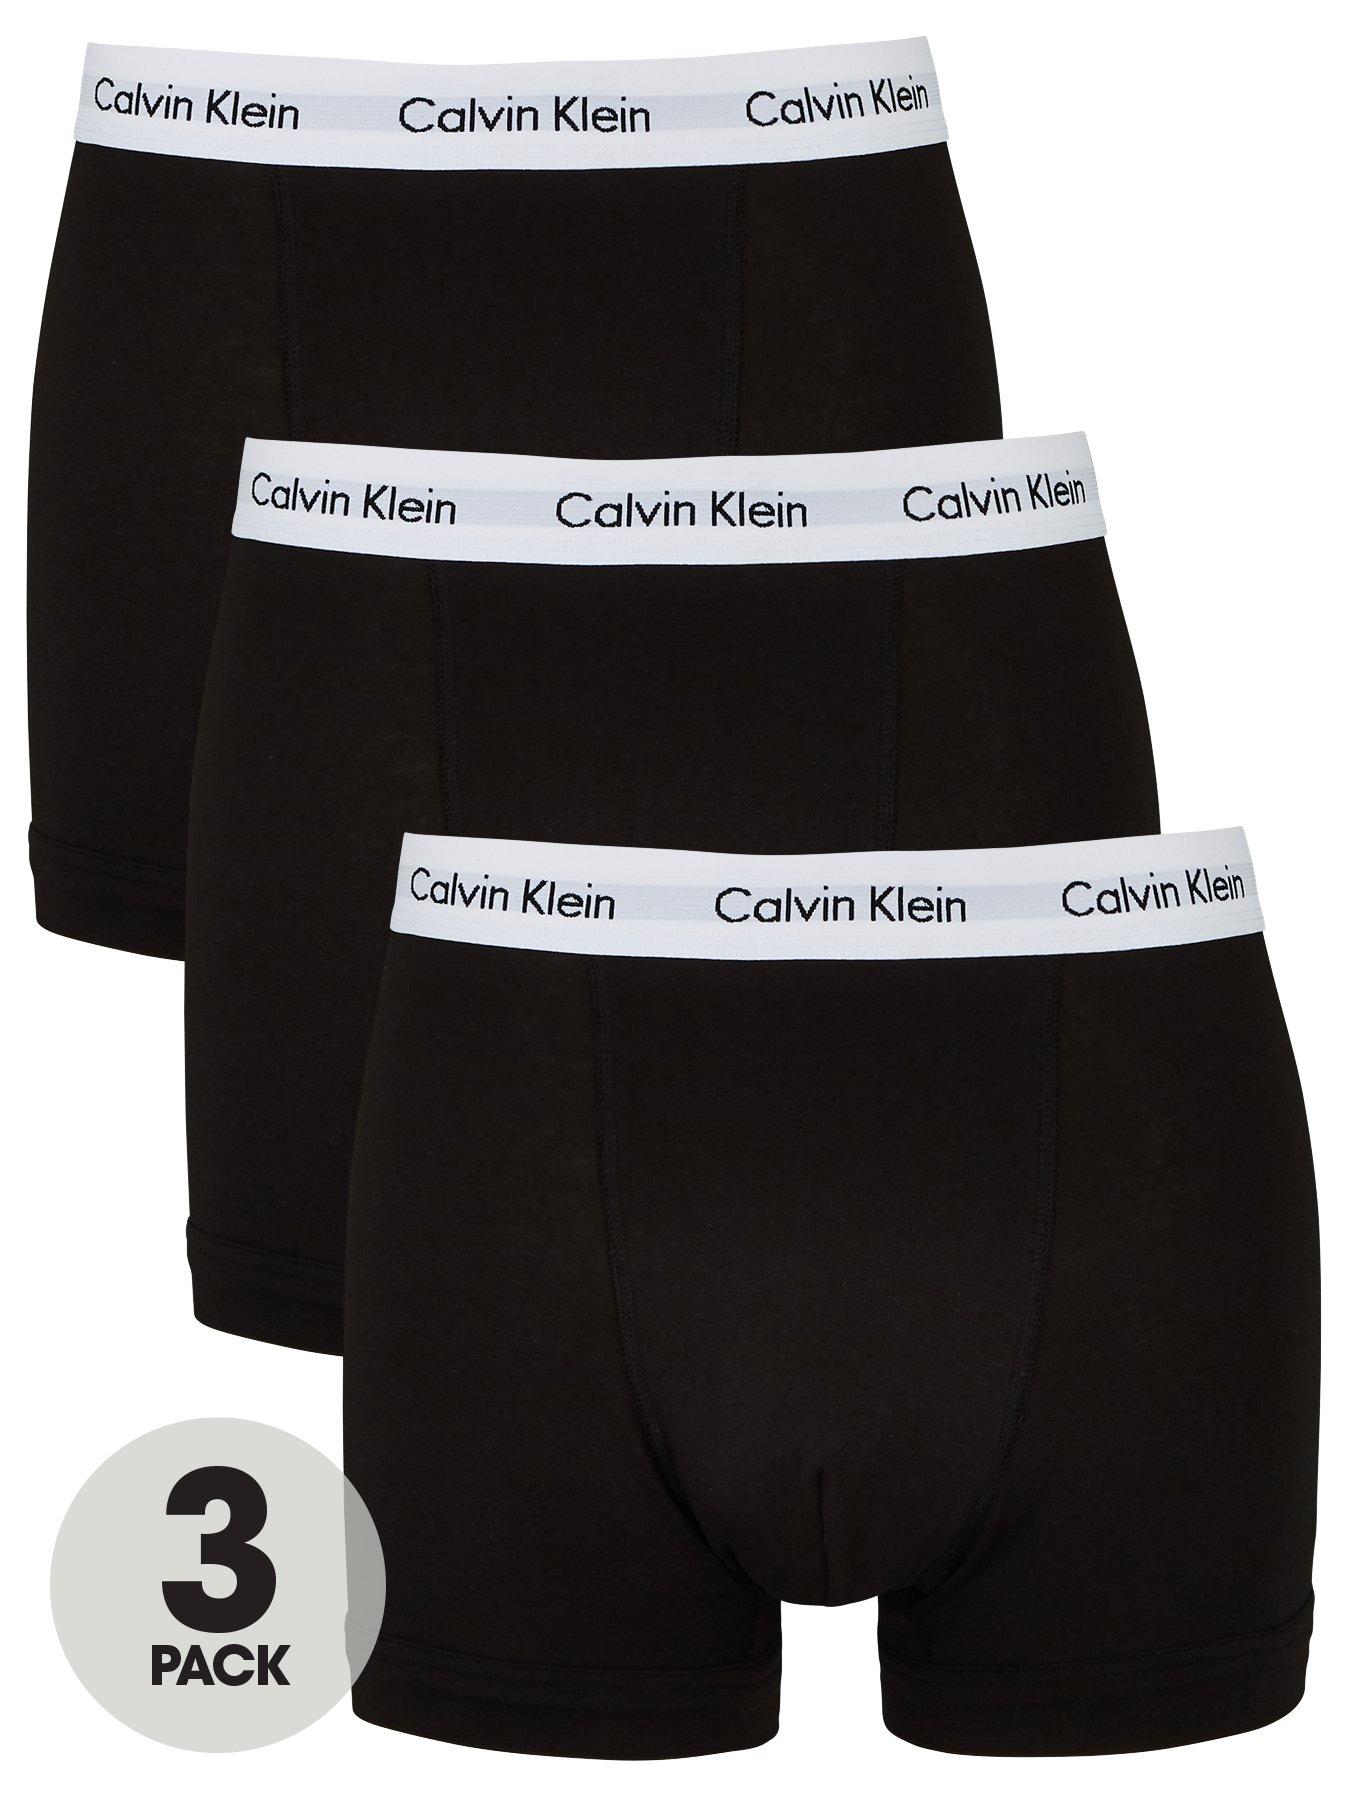 $54 32 Degrees Cool Men Underwear Black Blue Micro 2-Pack Boxer Briefs Size  S